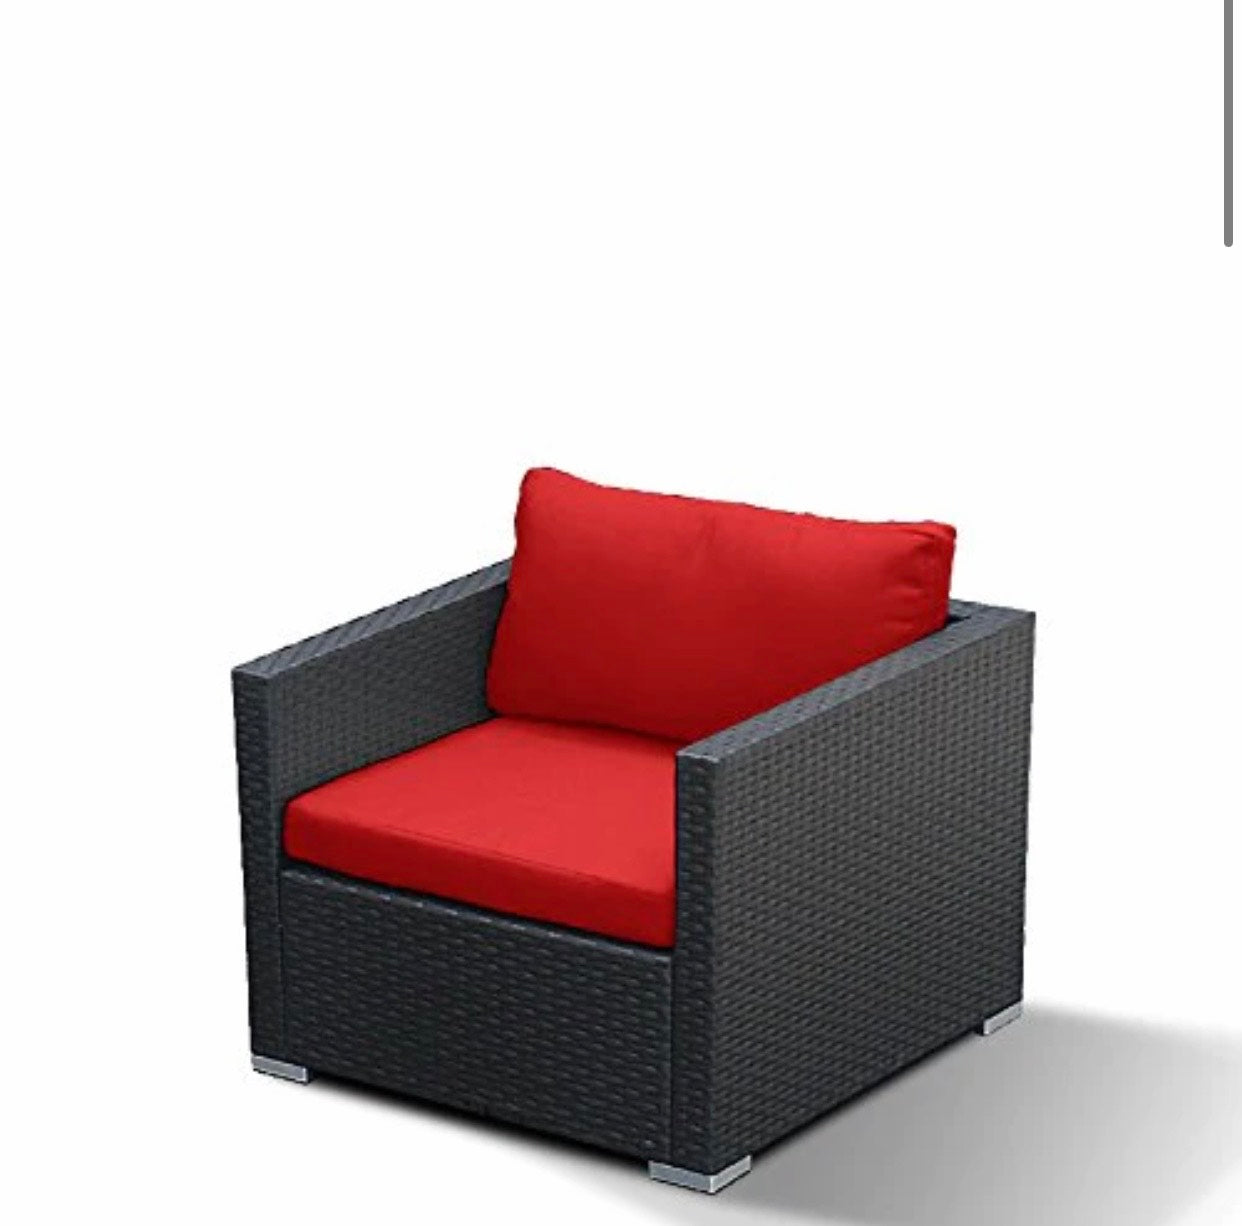 Crimson Red Club Chair Outdoor Patio Furniture Espresso Brown Wicker